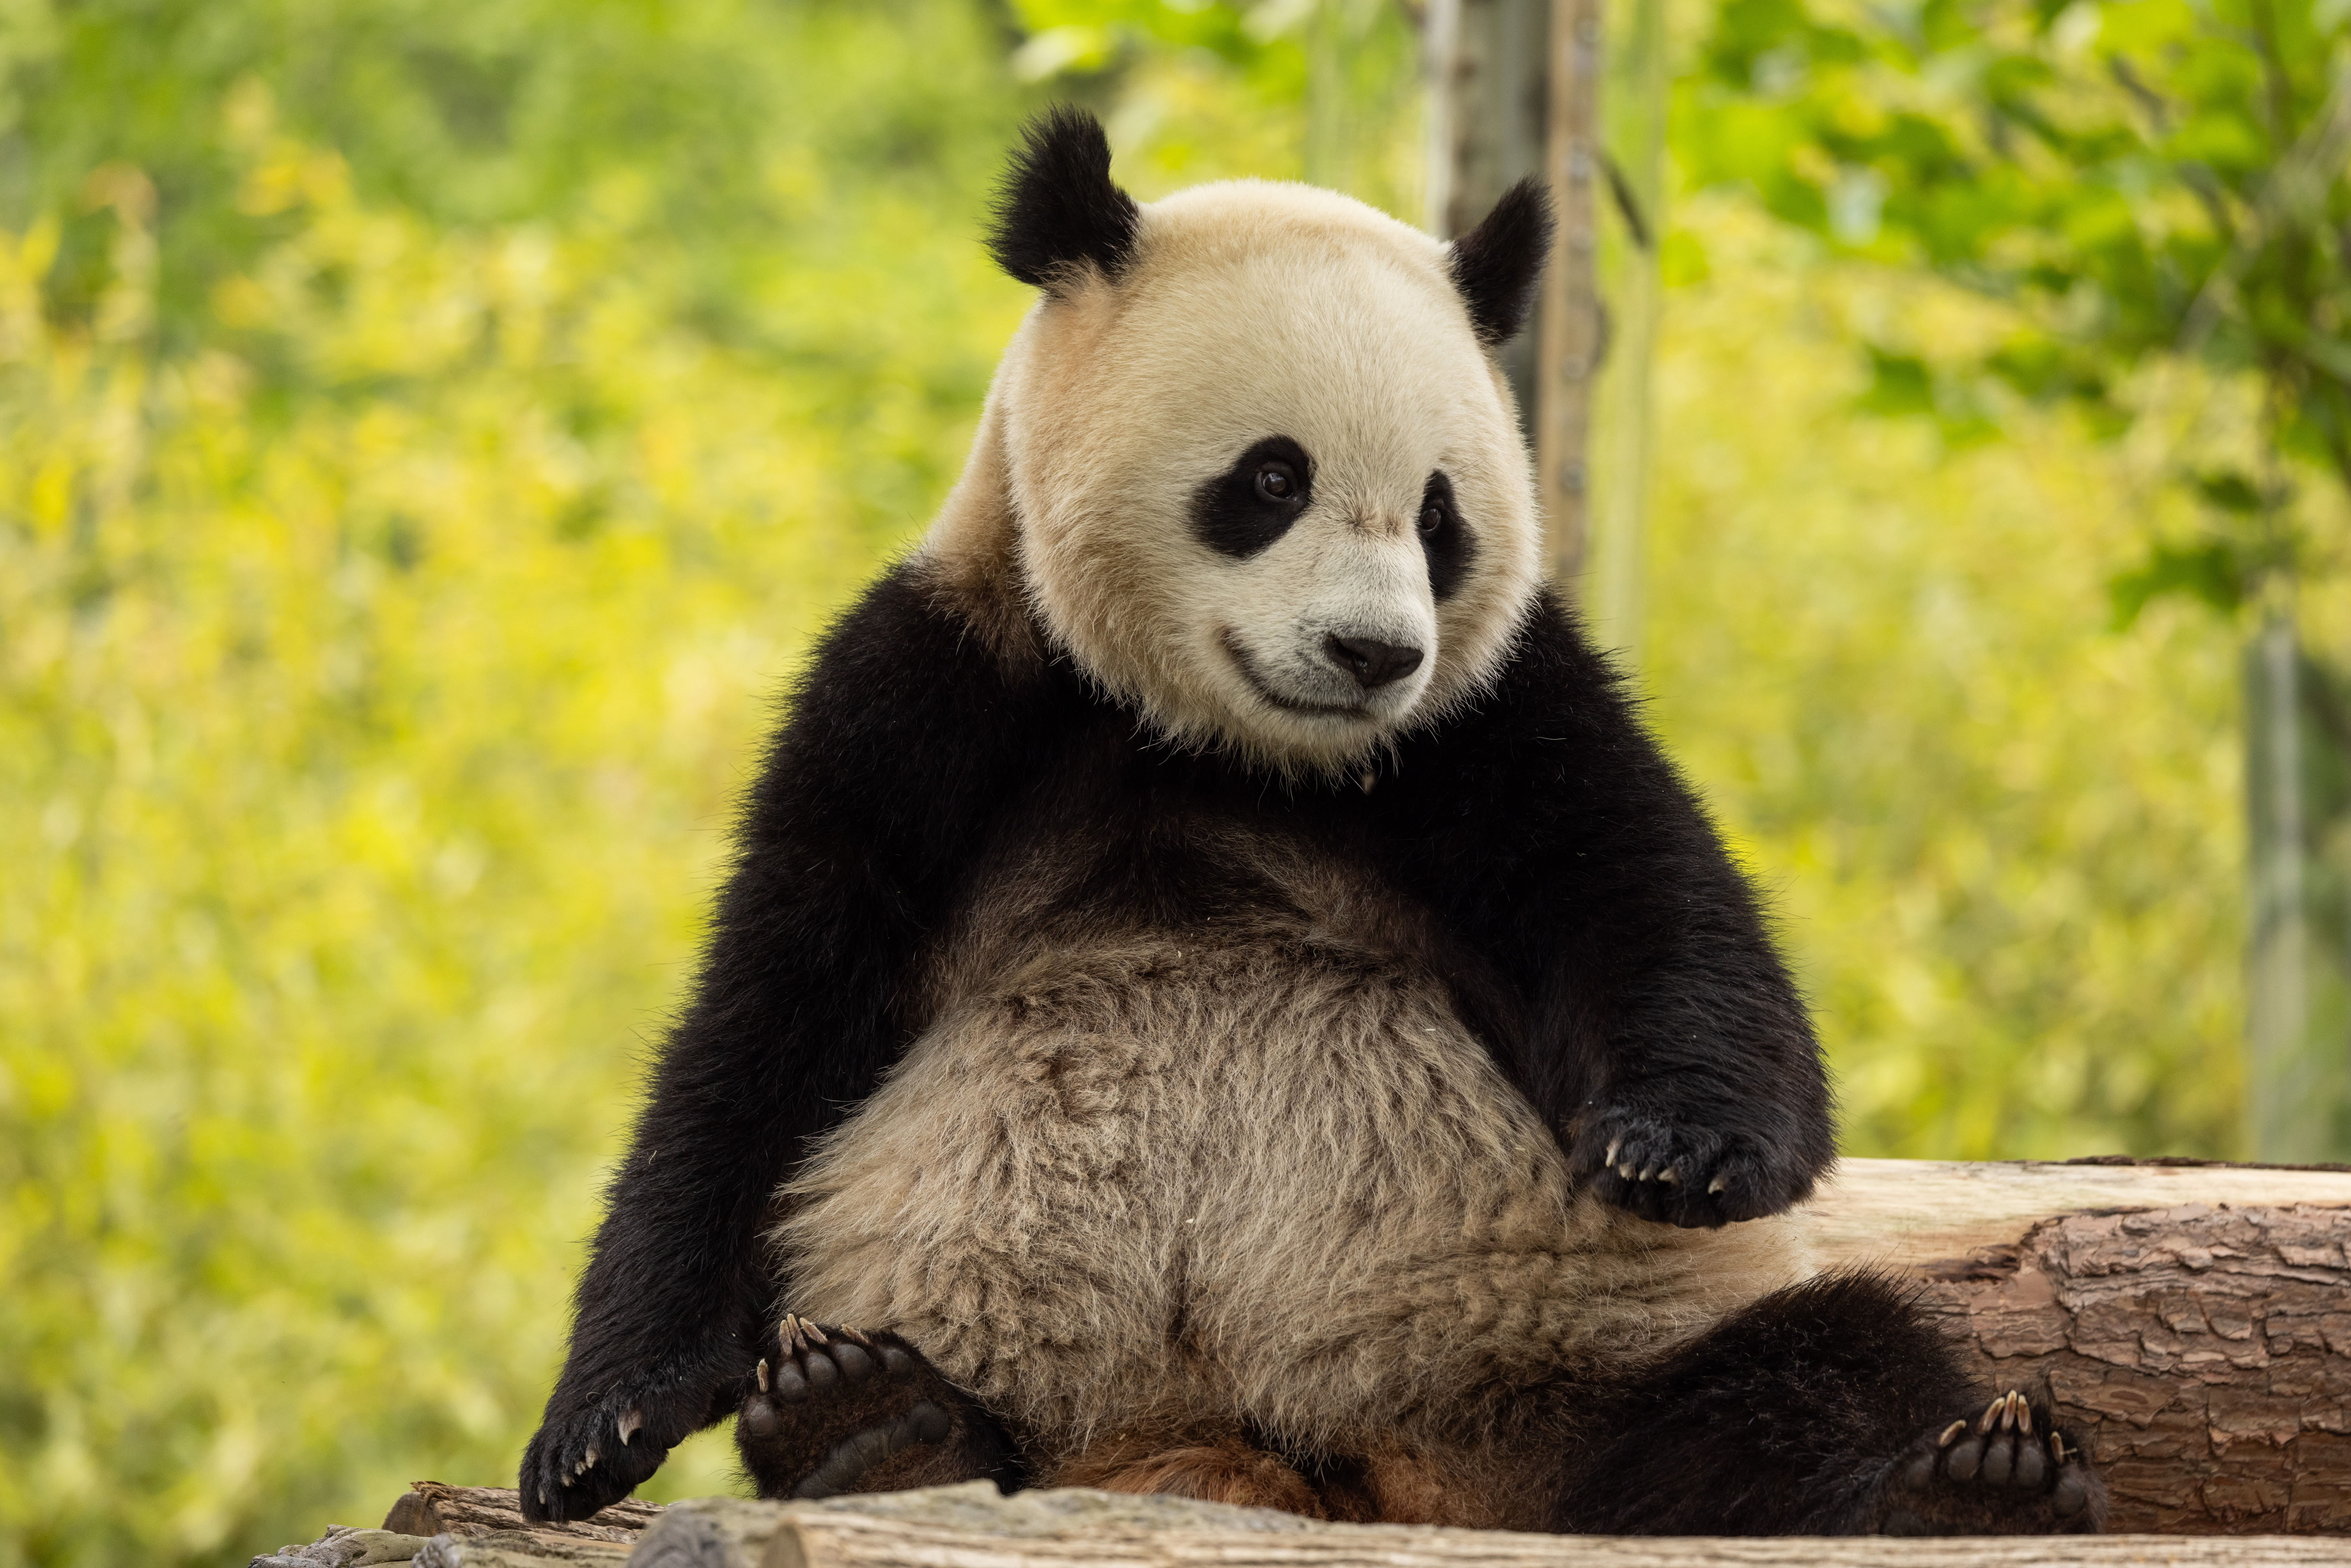 Giant pandas are returning to D.C.’s National Zoo. Meet Bao Li and Qing Bao.